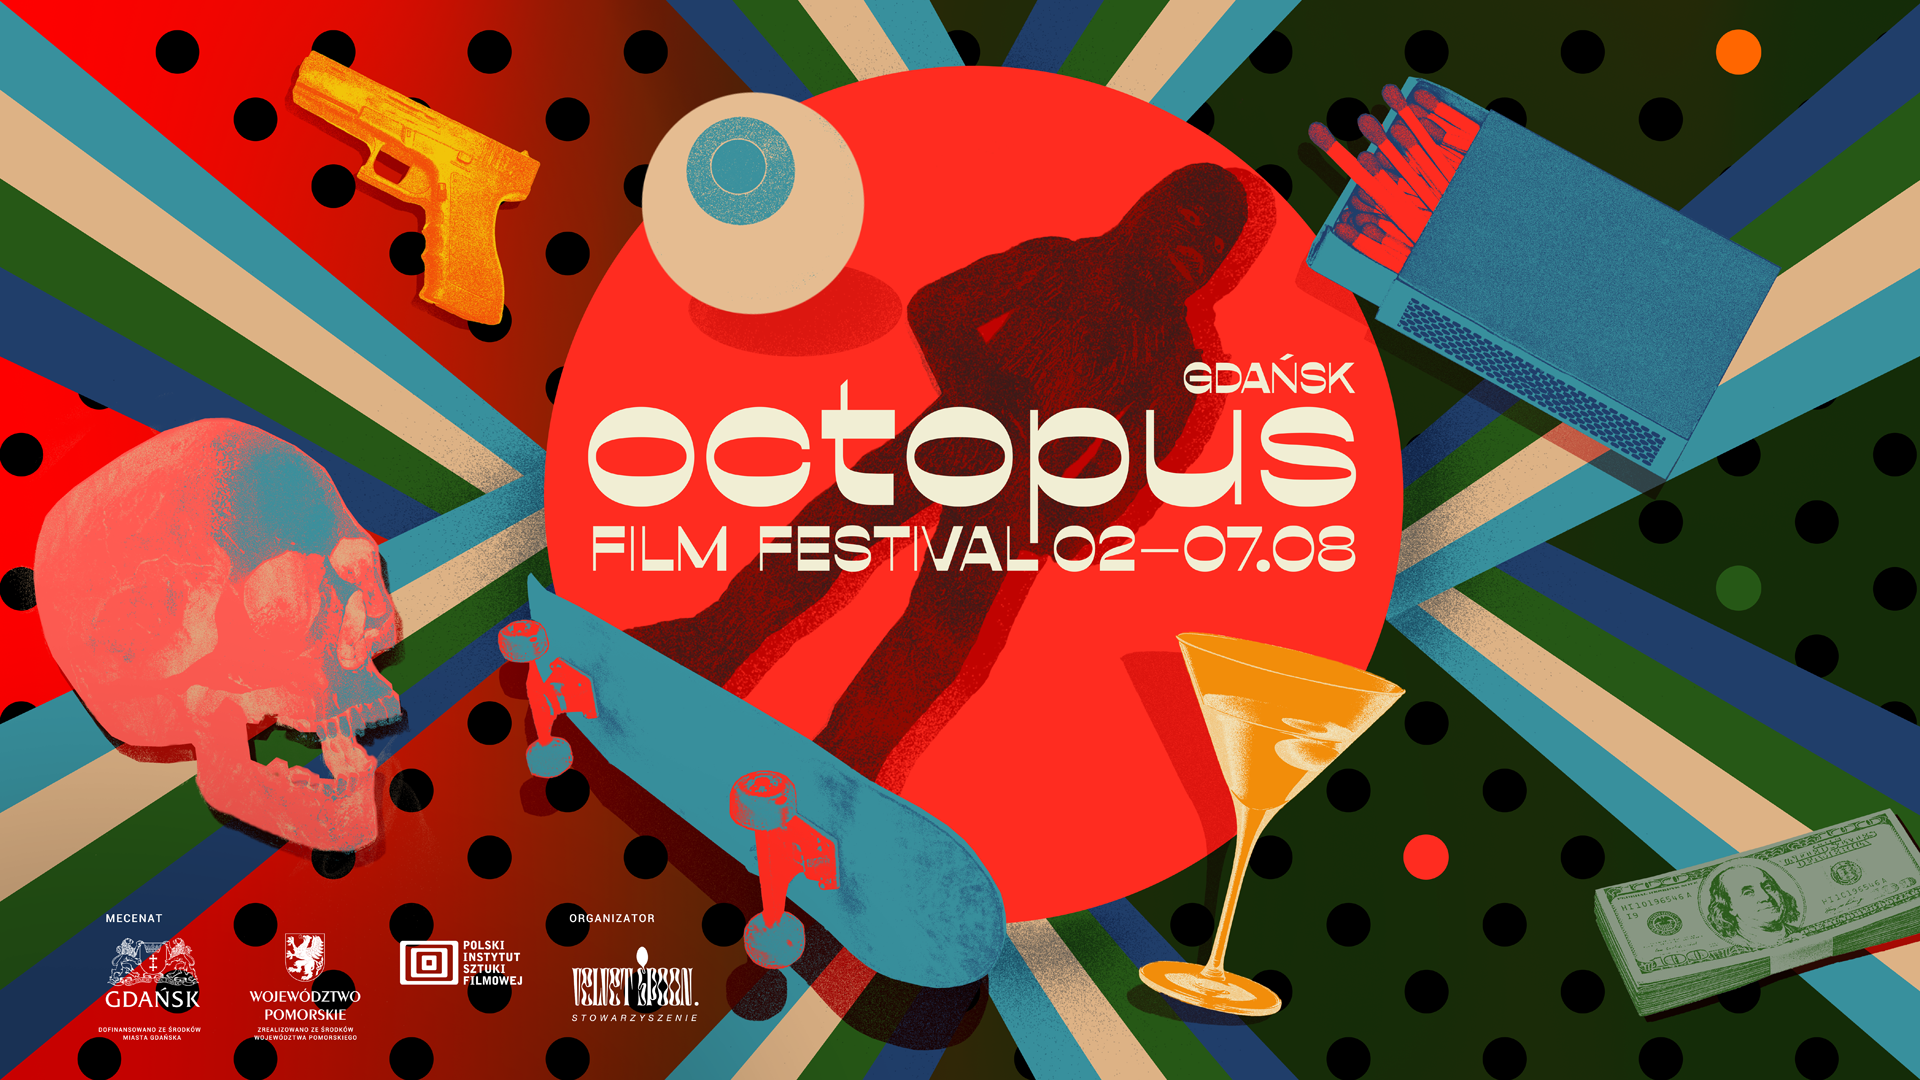 Octopus Film Festival Plakat